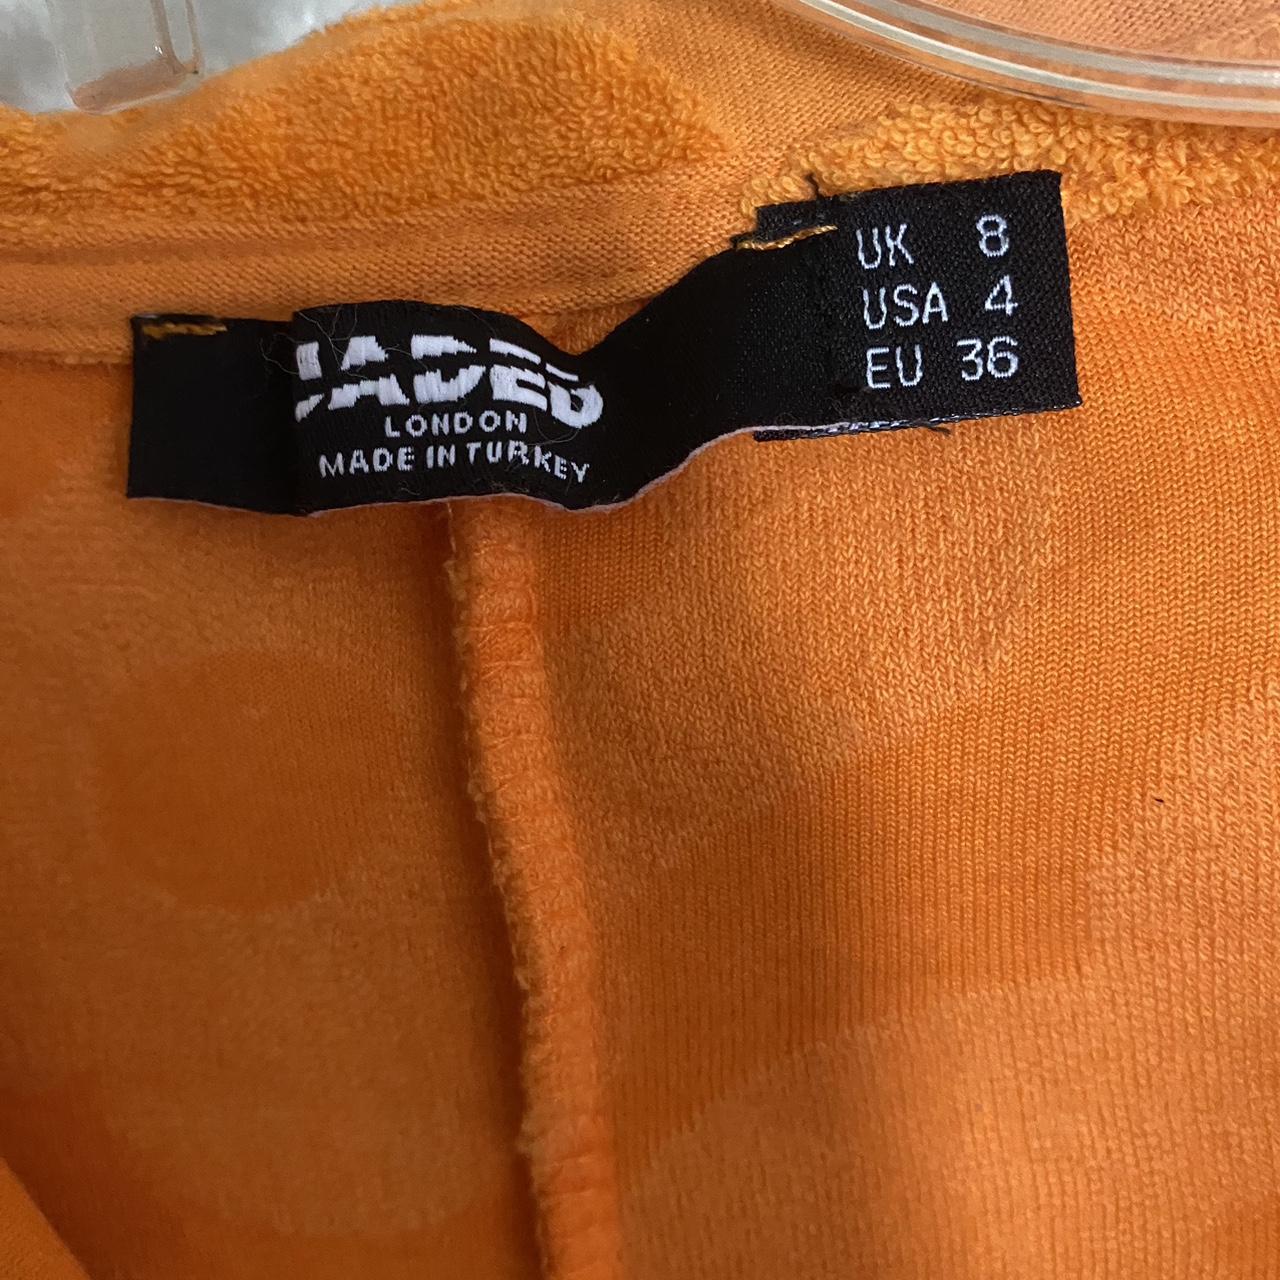 Jaded Orange 70s Floral Jumpsuit Towel material... - Depop